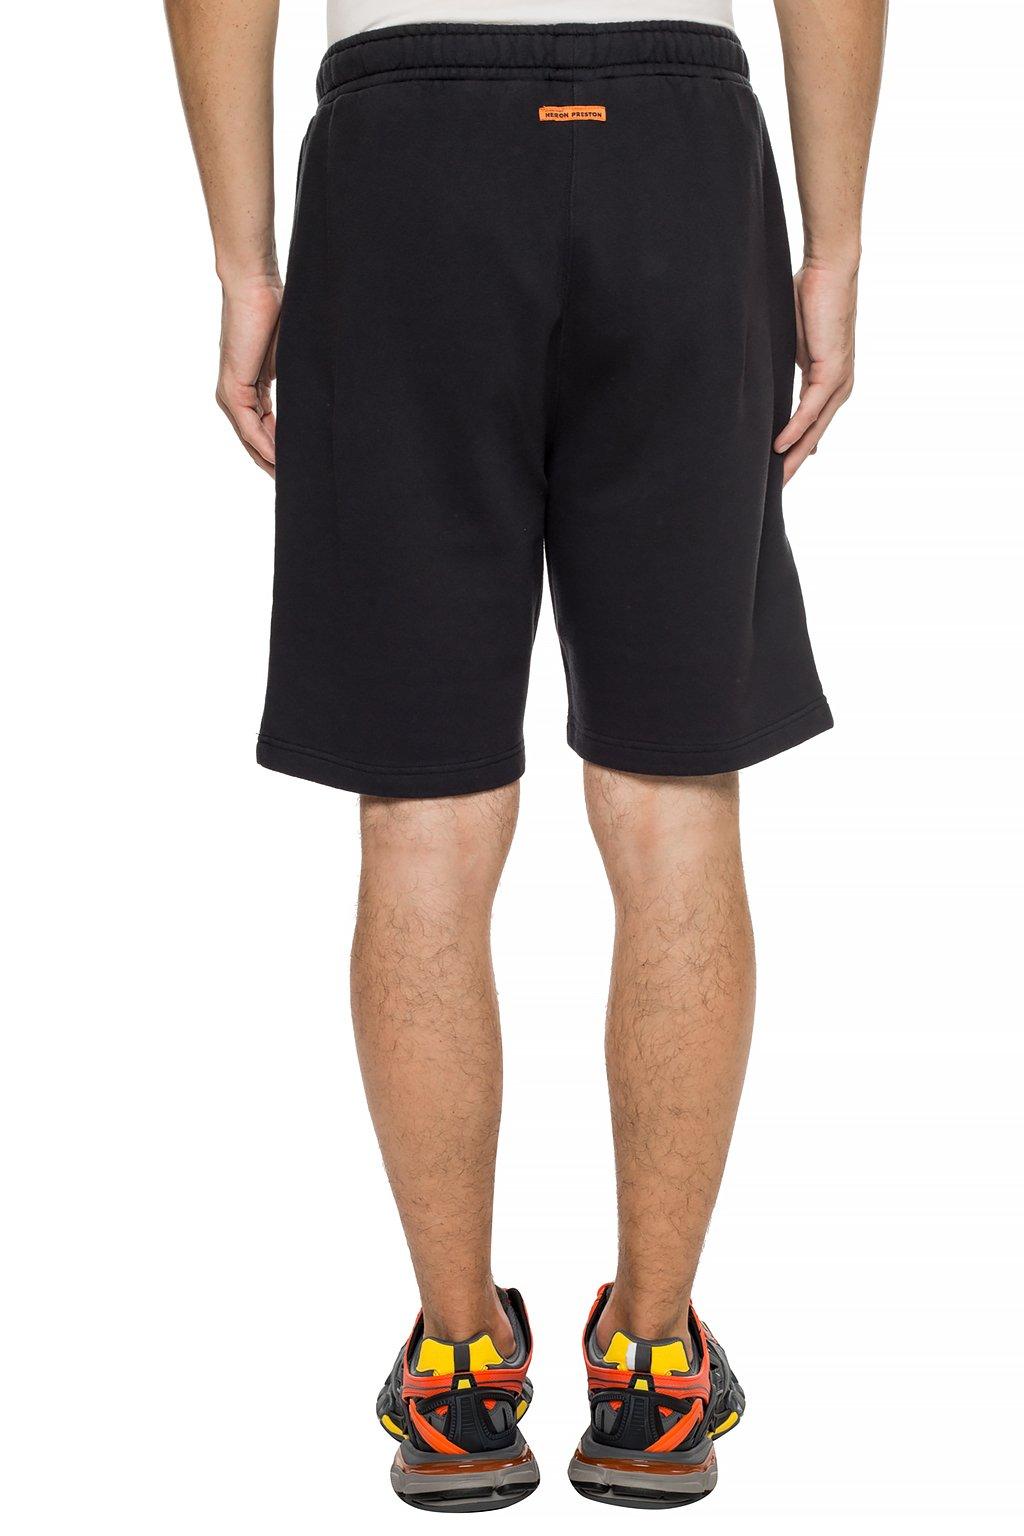 Heron Preston Cotton Logo Shorts in Black for Men - Lyst